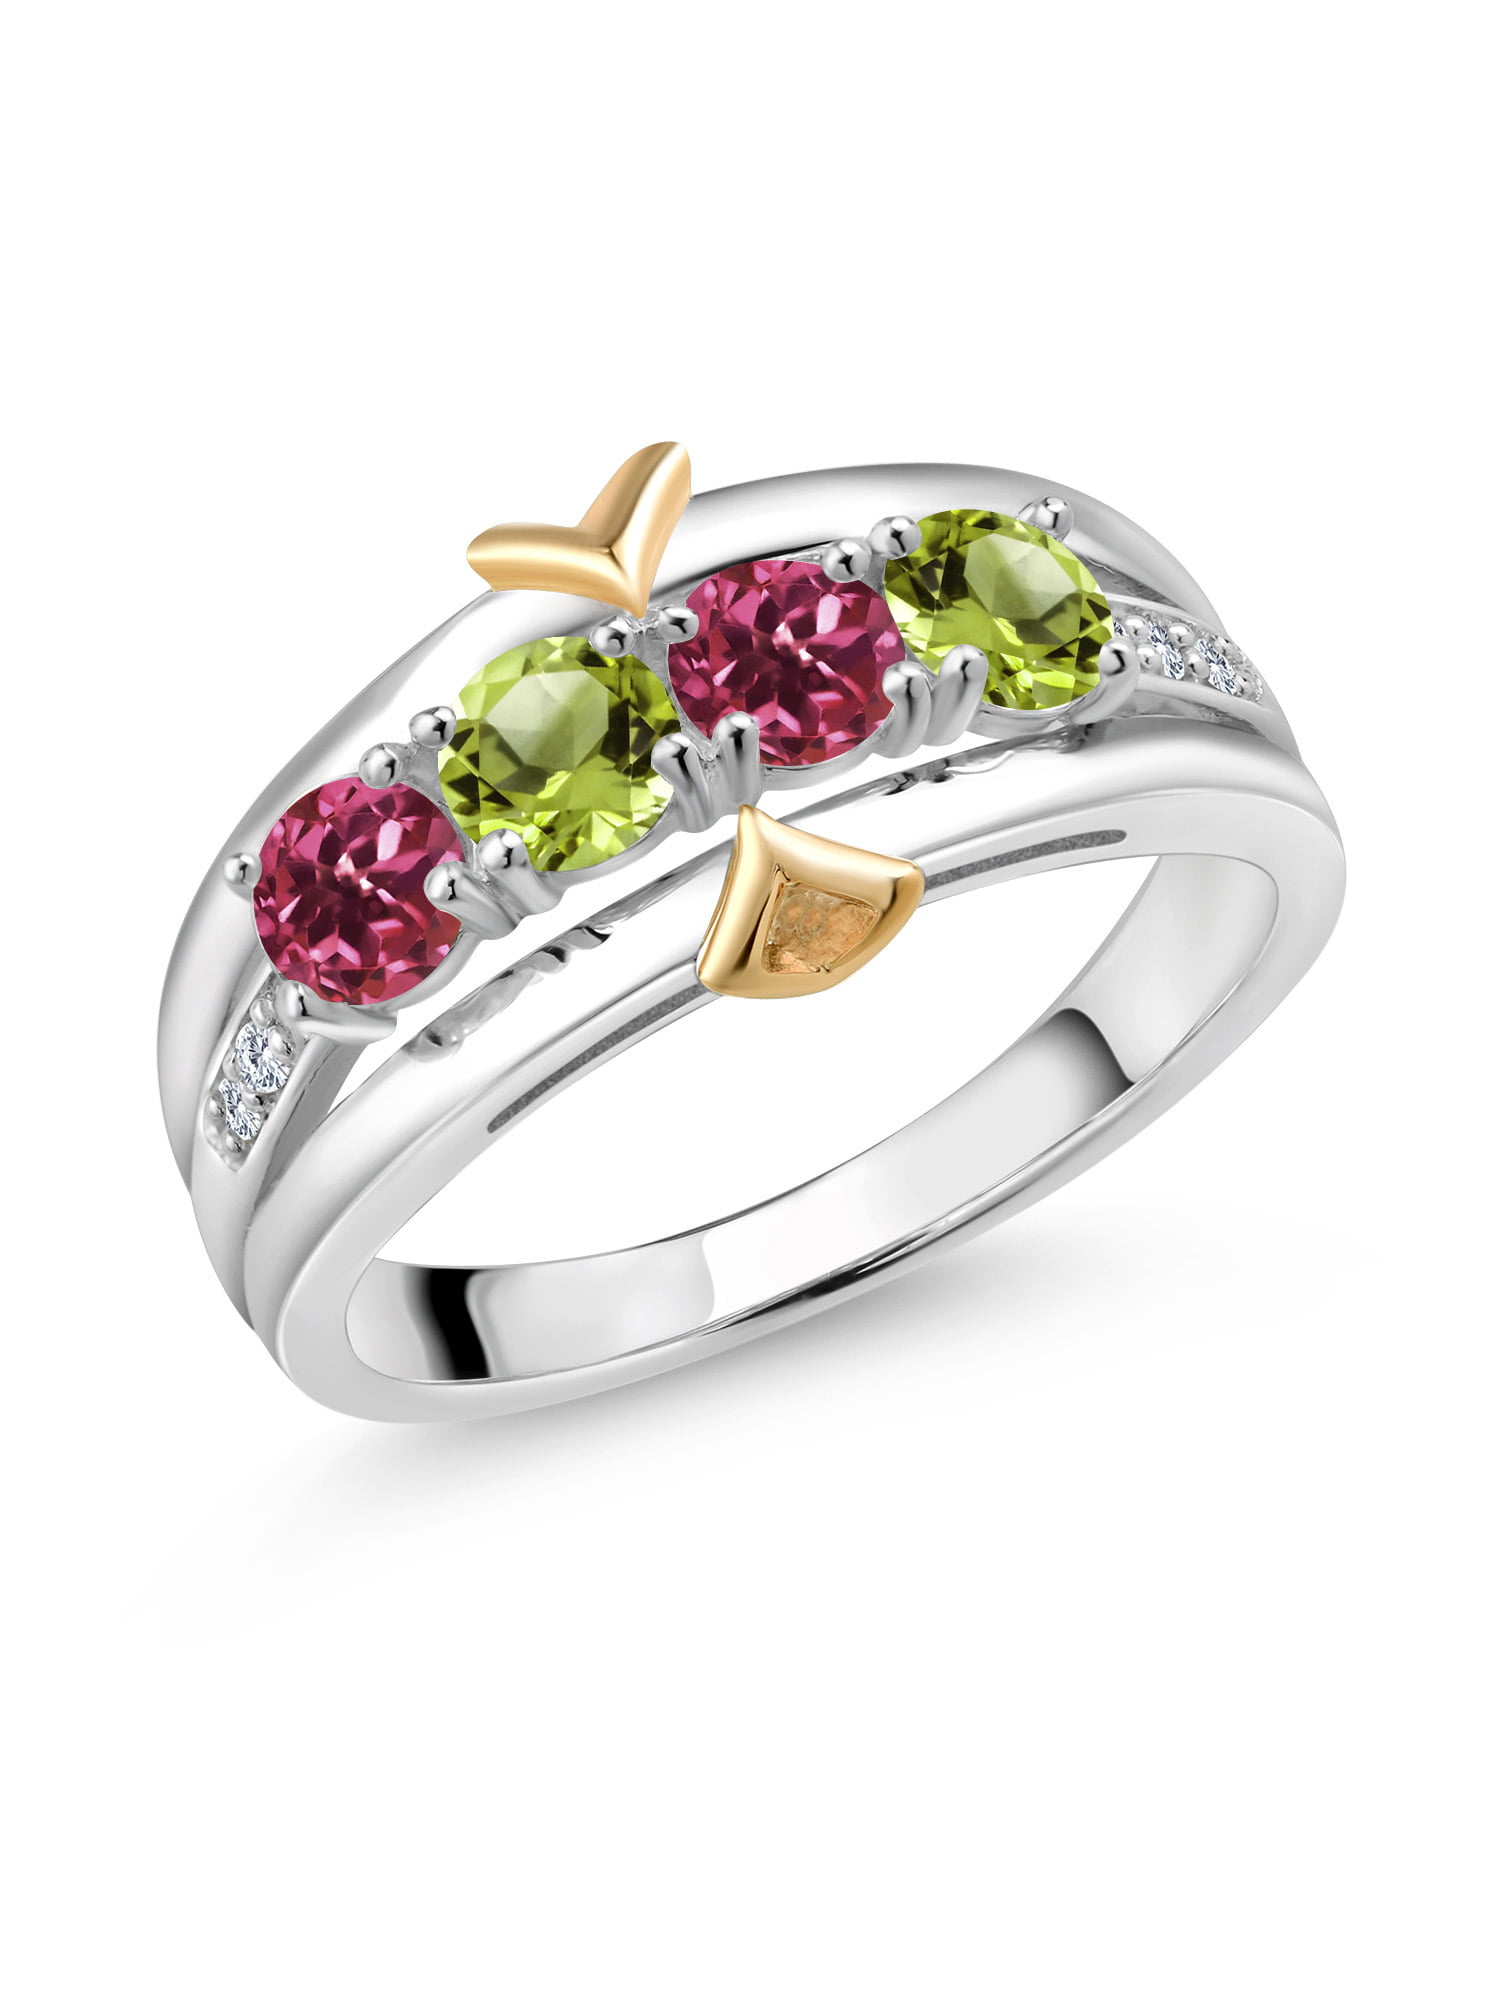 gemstones healing stones Elastic ring made of colorful tourmalines stacking rings boho rose gold